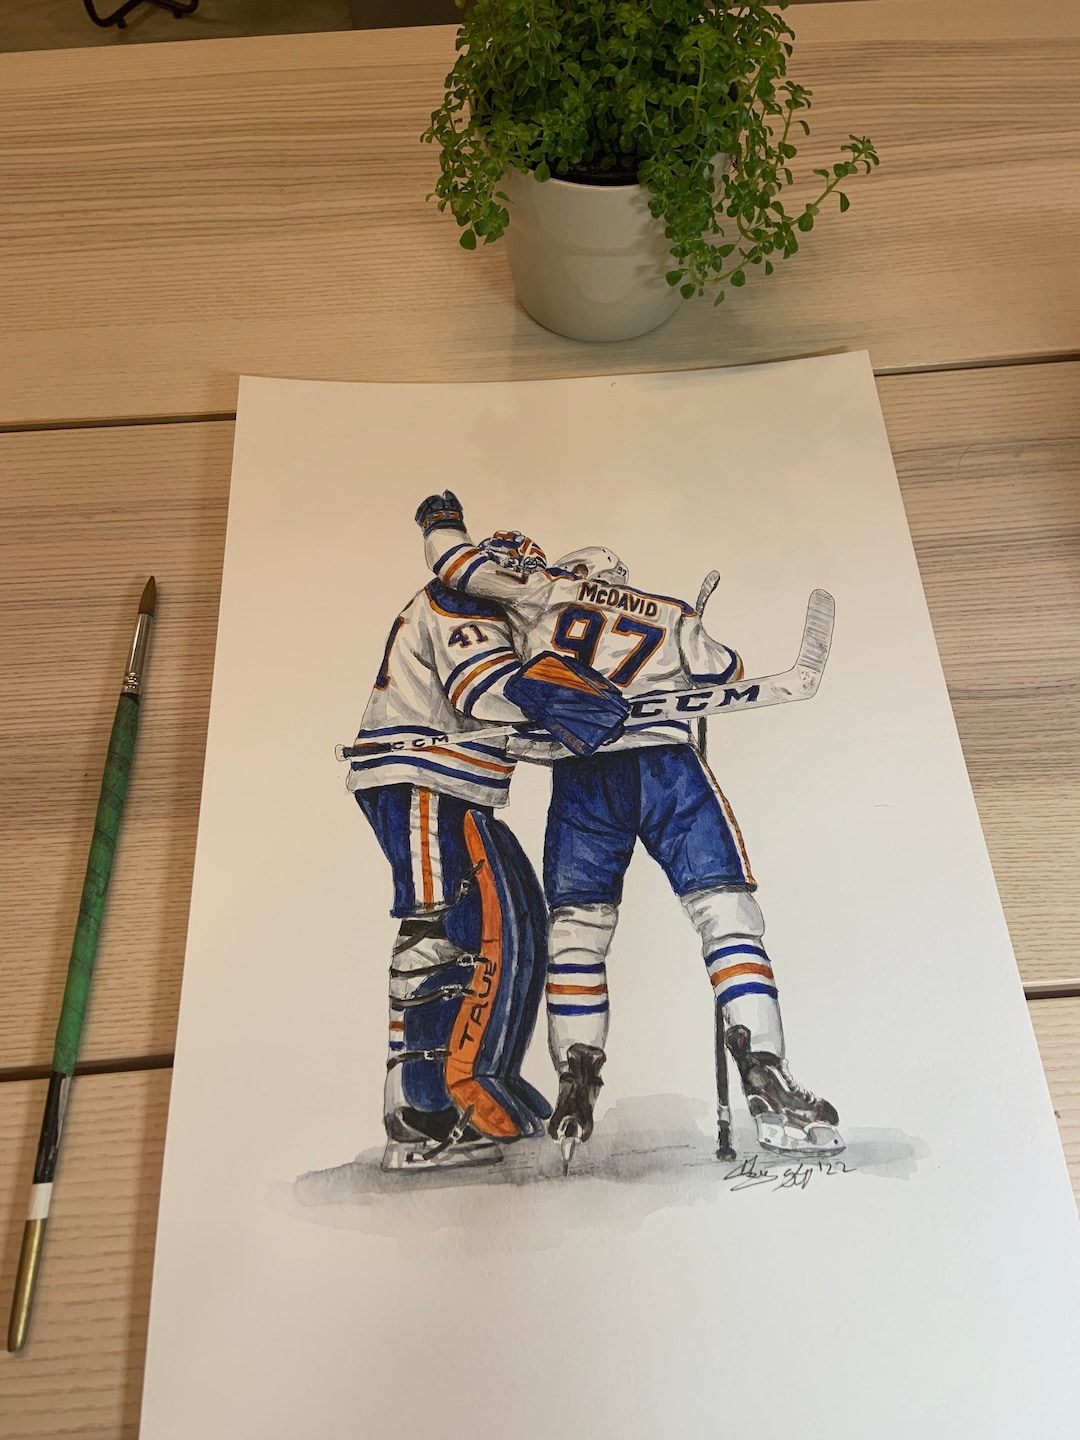 Trevor Zegras by MikeNguyenArt // Goal // Anaheim Ducks // Hockey // NHL //  Watercolour Painting